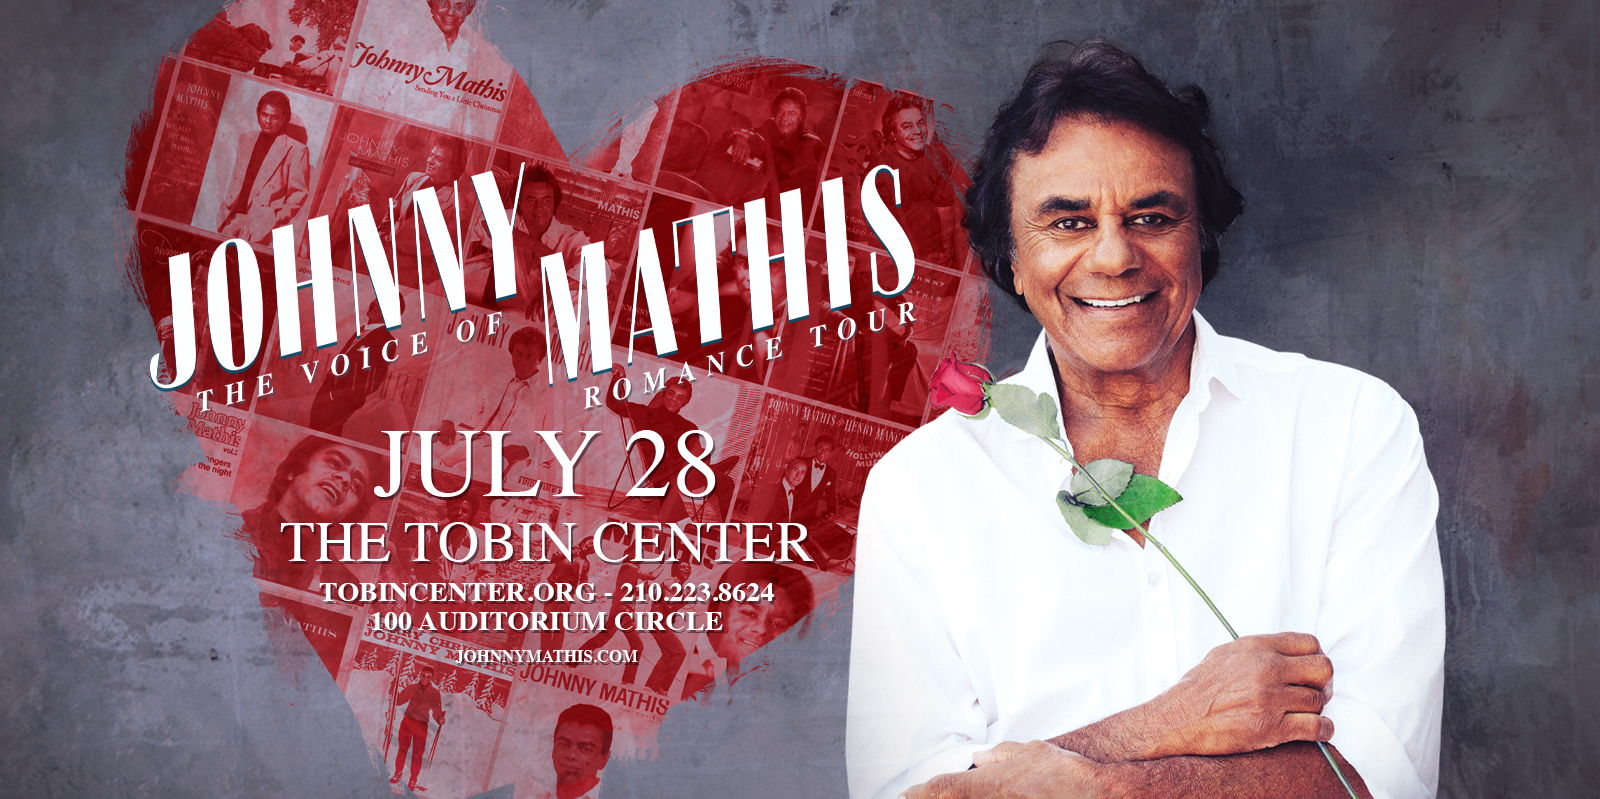 Johnny Mathis promotional image